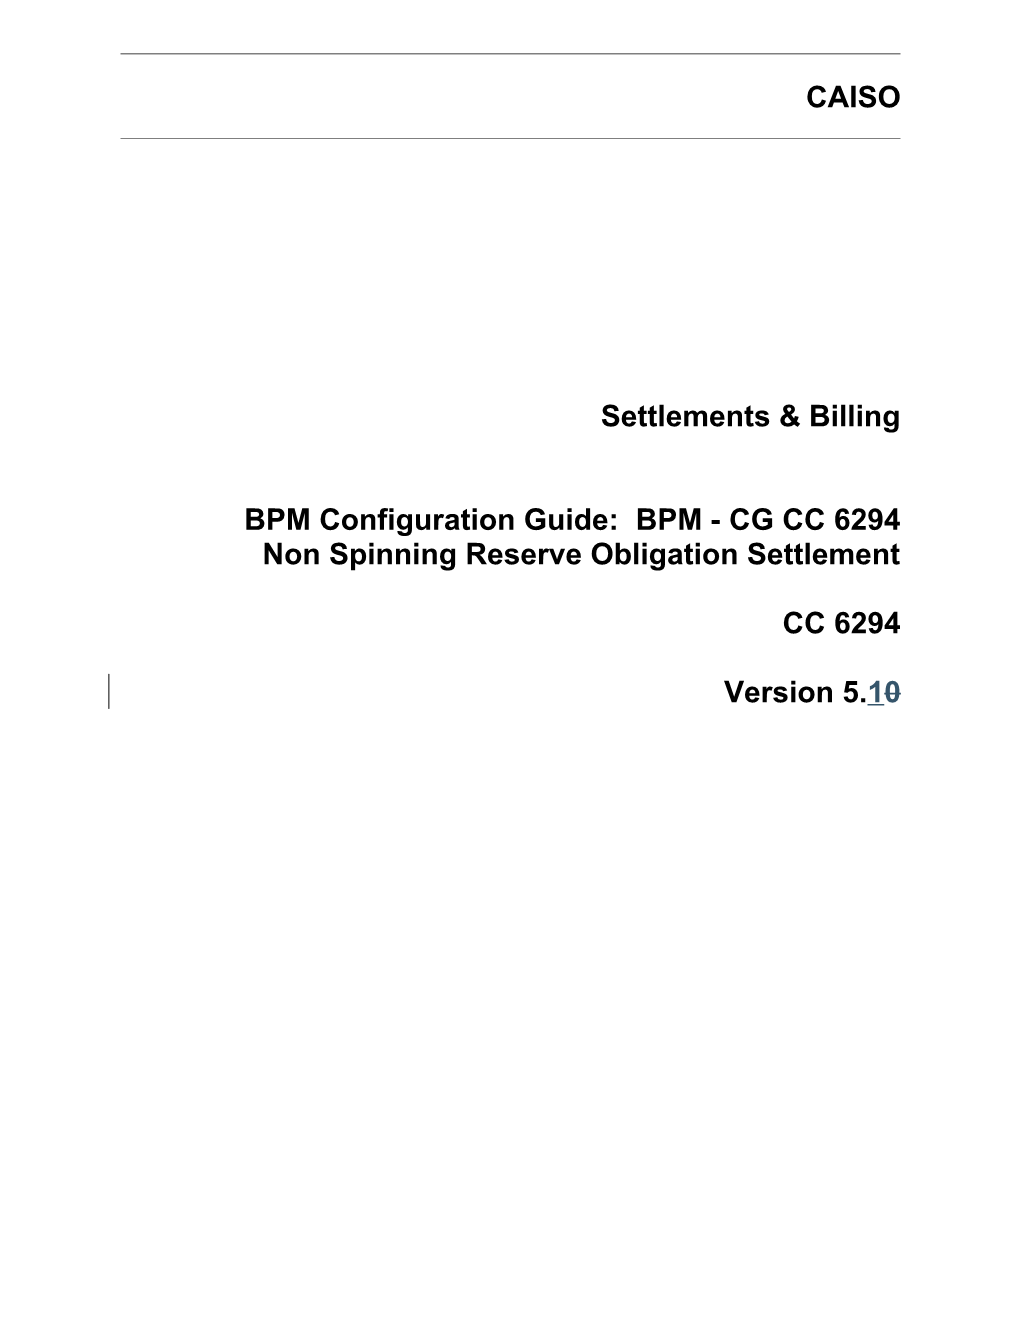 BPM - CG CC 6294 Non Spinning Reserve Obligation Settlement